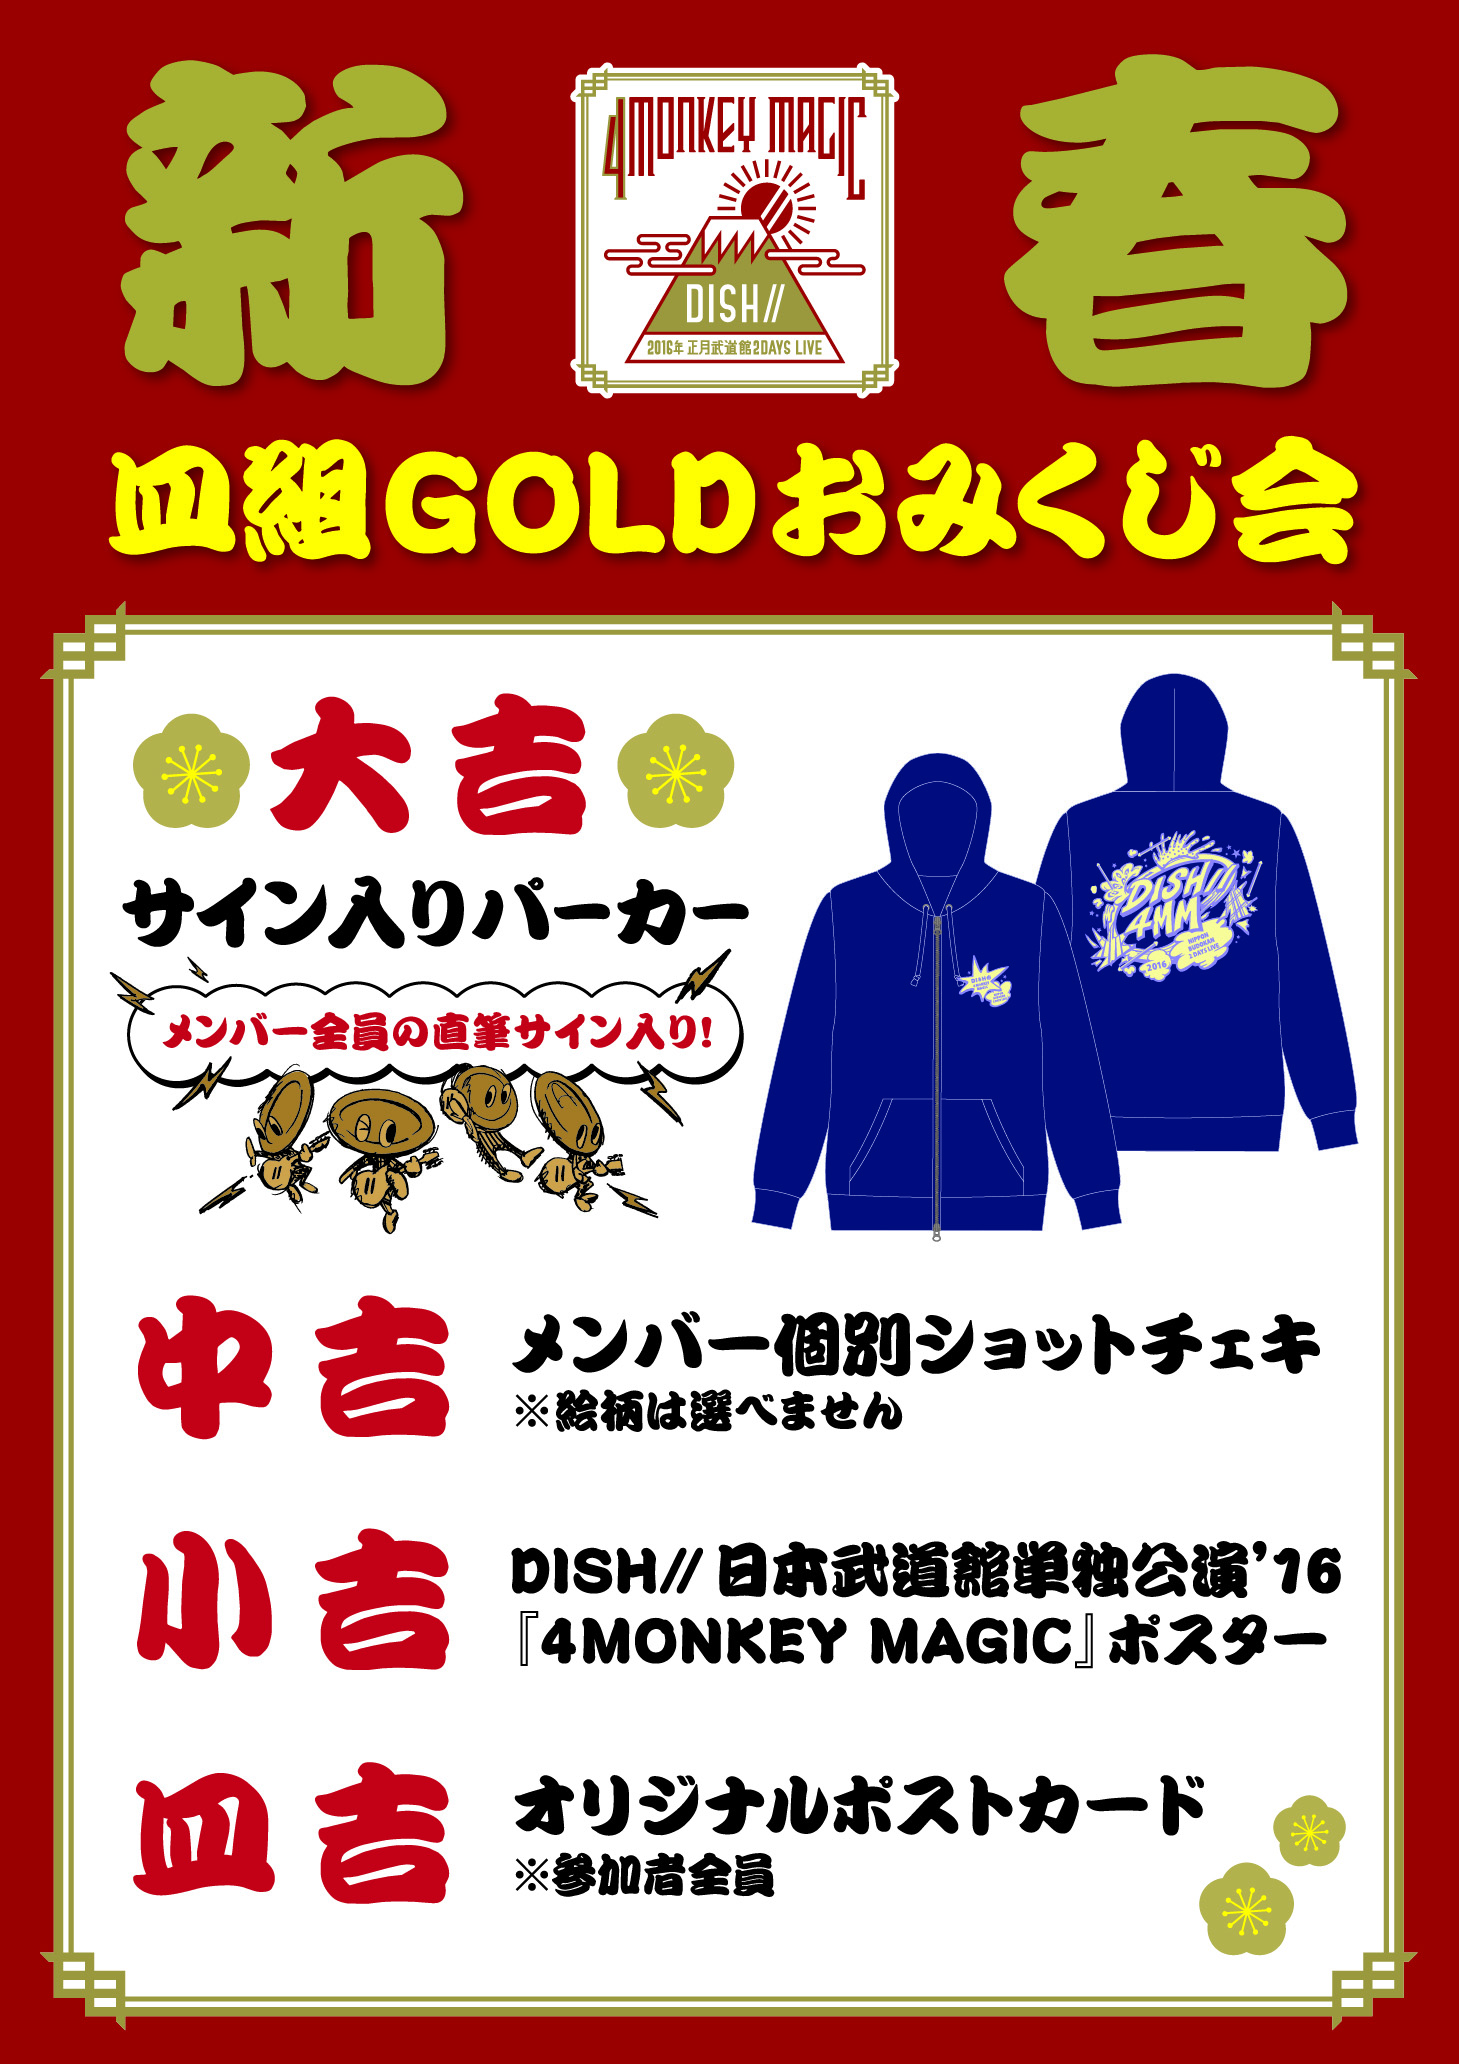 DISH// 日本武道館単独公演'16『4 MONKEY MAGIC』にて、新春 皿組GOLD